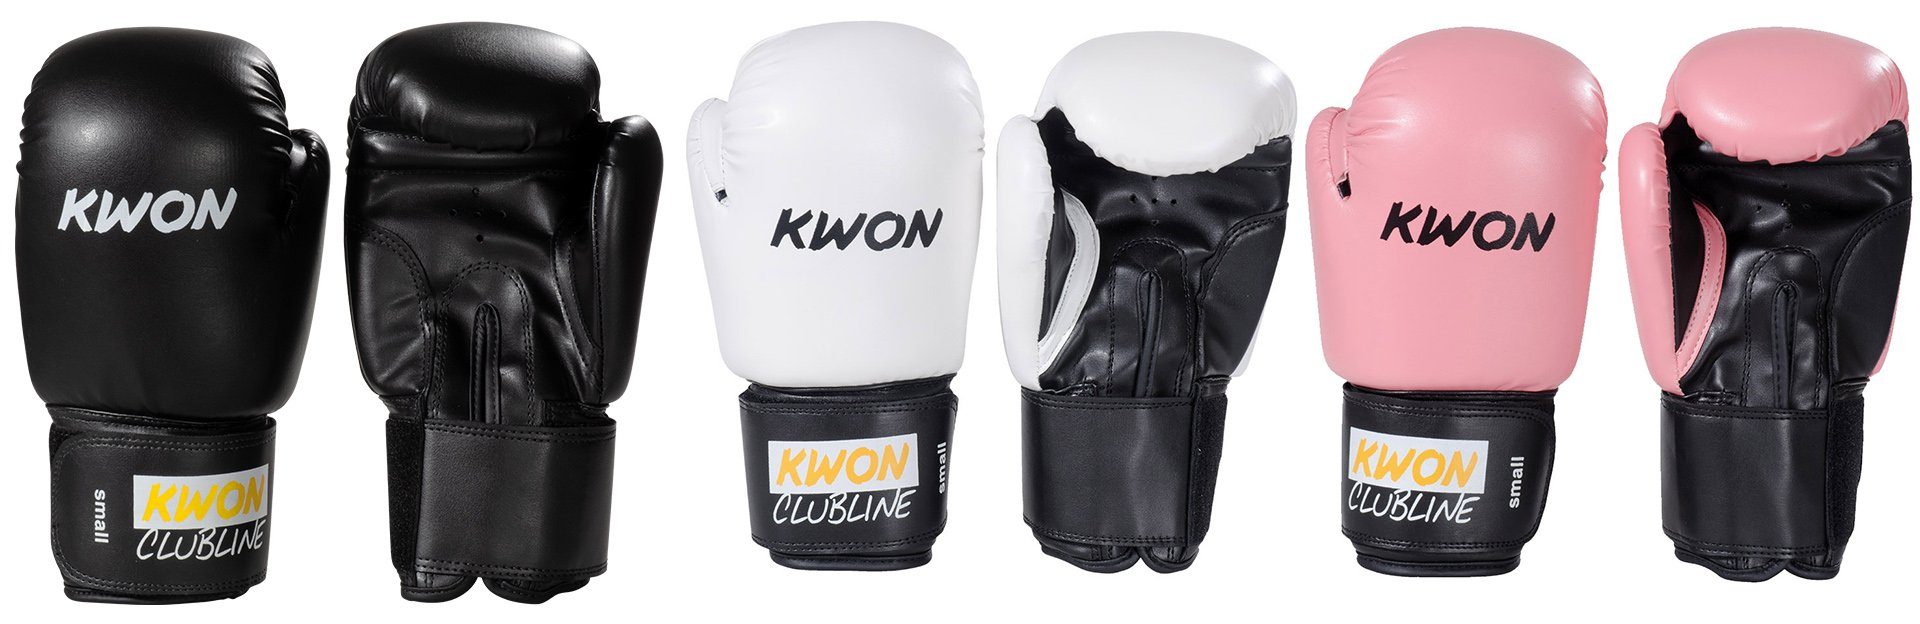 Boxen, weiß Line small KWON (Profi, Thai, Pointer 8 Serie), Muay MMA Club Unzen Box-Handschuhe Kickboxen, Boxen Boxhandschuhe Hand Kickboxen